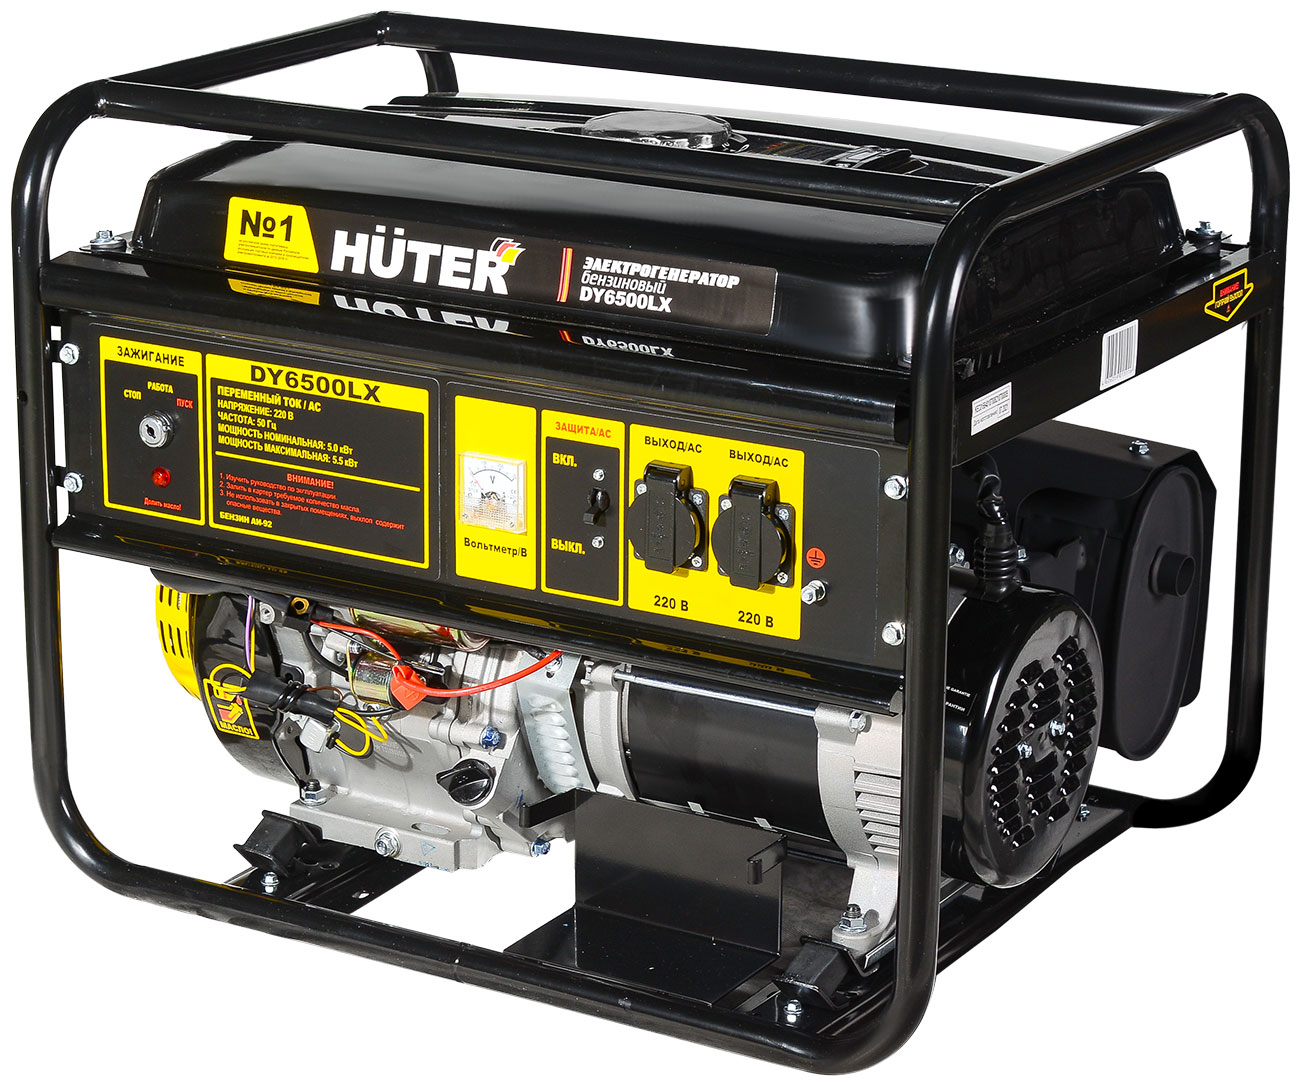 Электрический генератор и электростанция Huter DY6500LX- электростартер электрический генератор и электростанция huter dy5000l